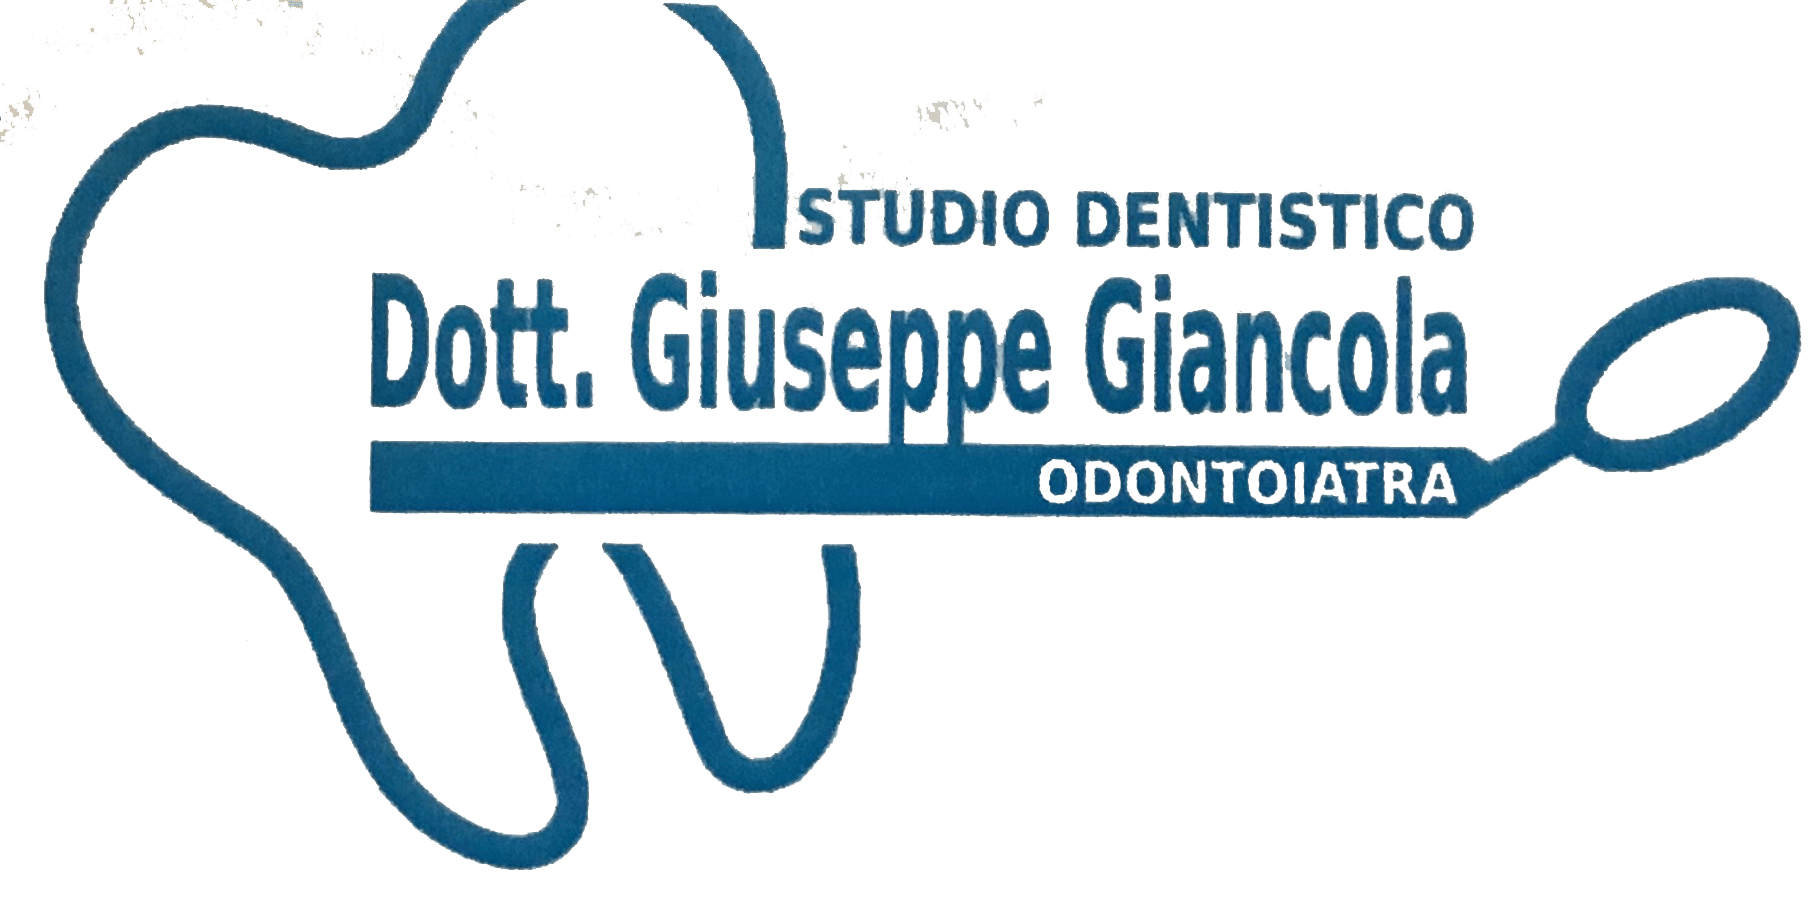 GIANCOLA DOTT. GIUSEPPE - LOGO